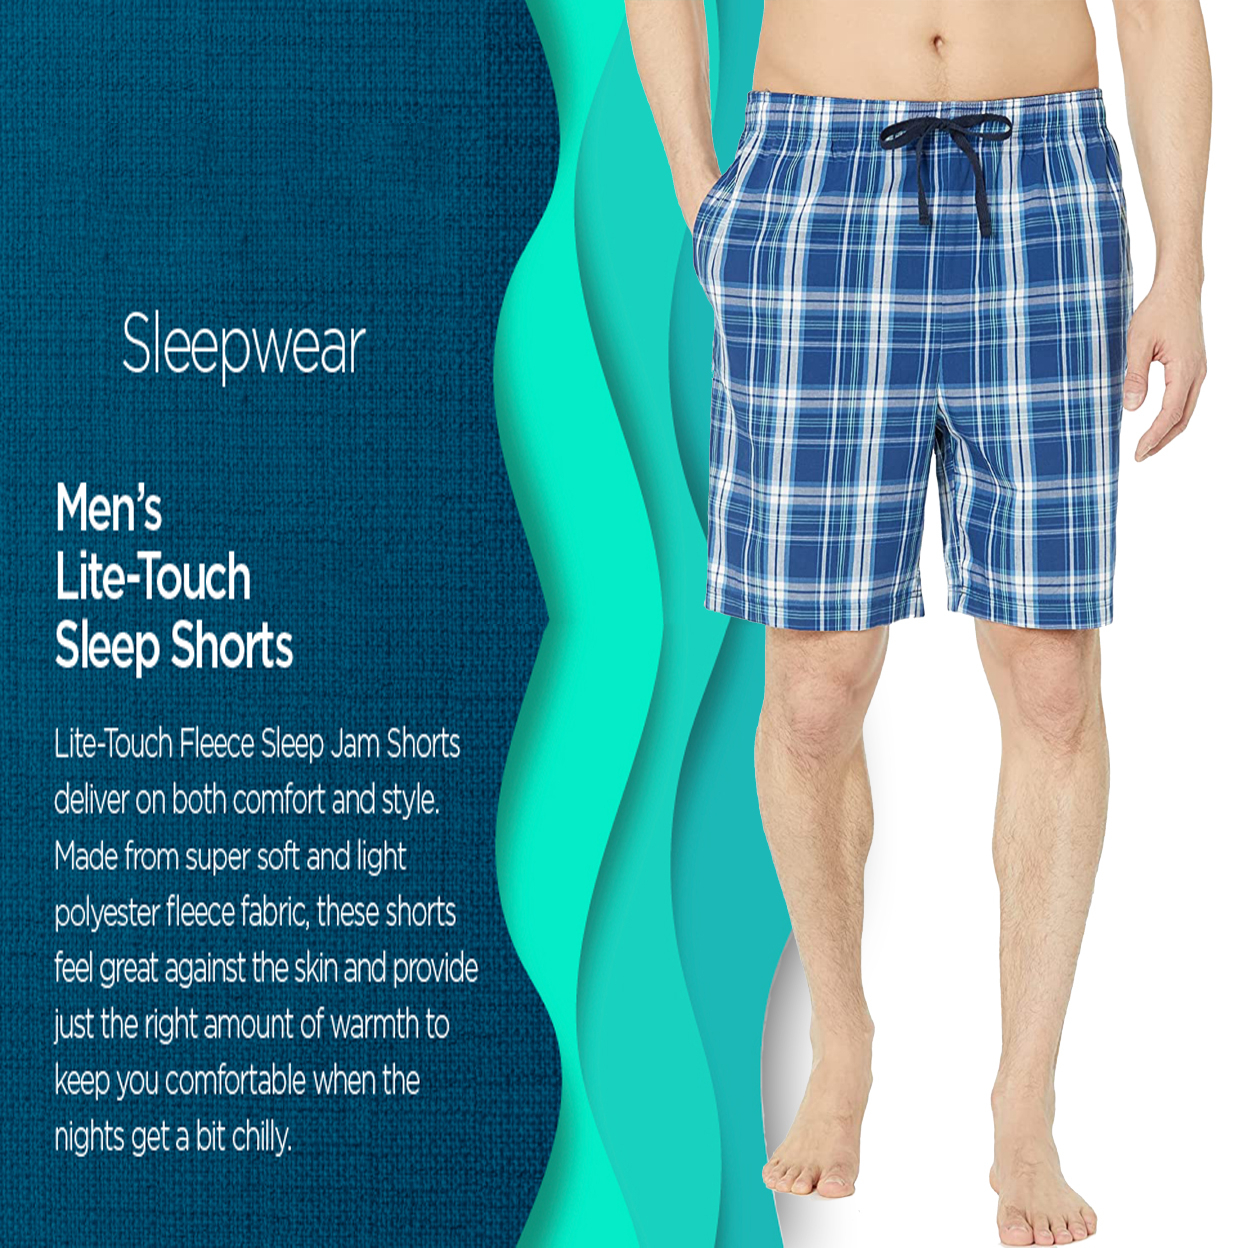 3-Pack: Men's Soft Plaid Flannel Sleep Lounge Pajama Shorts - Large